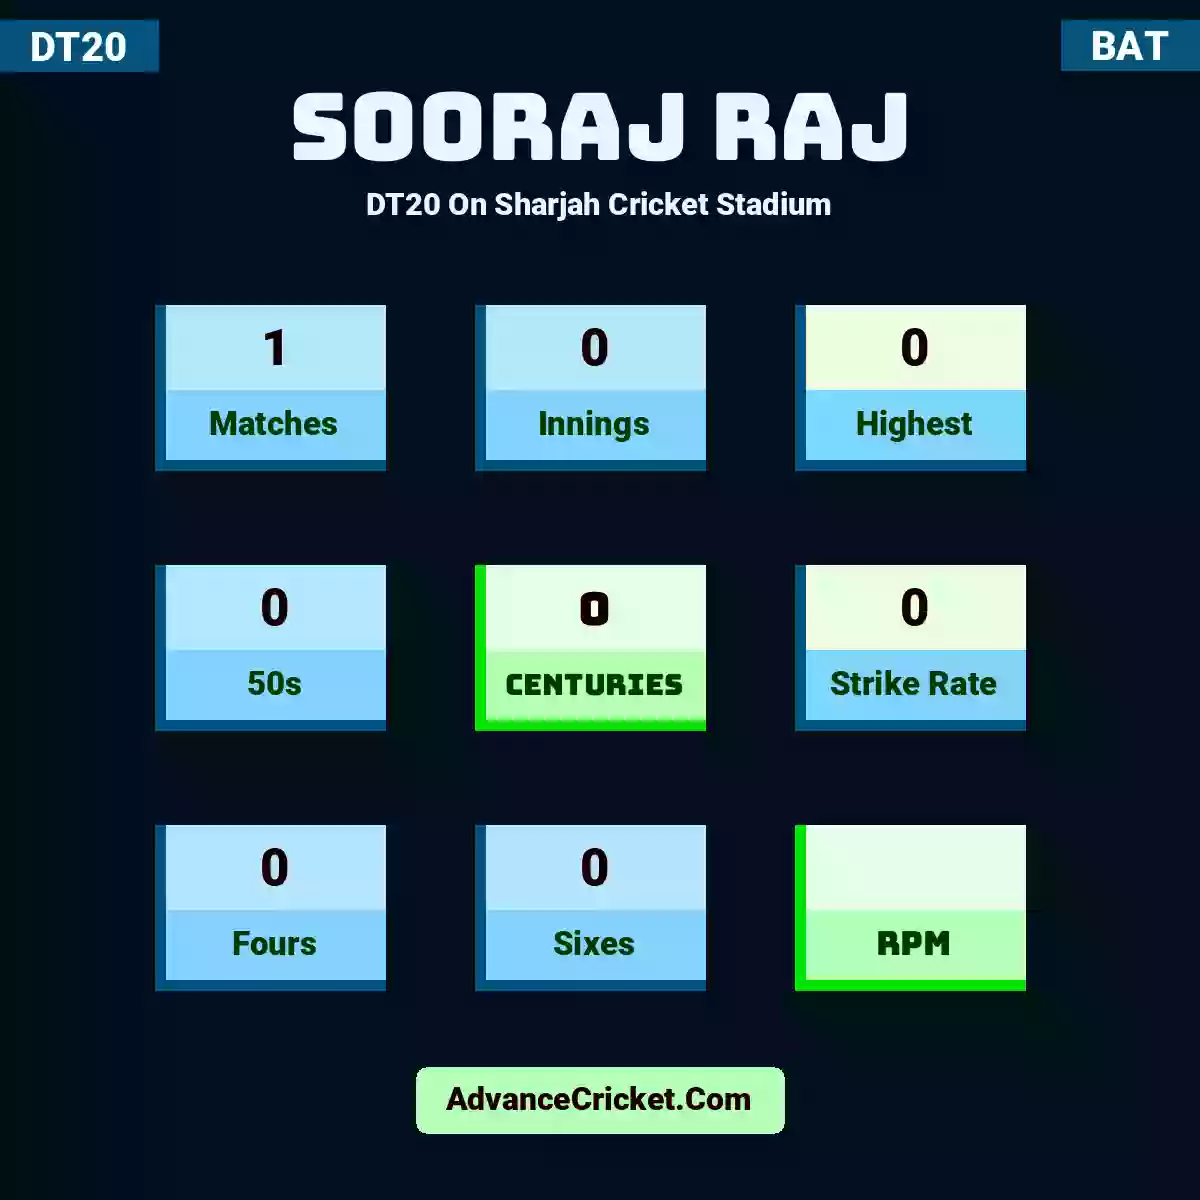 Sooraj Raj DT20  On Sharjah Cricket Stadium, Sooraj Raj played 1 matches, scored 0 runs as highest, 0 half-centuries, and 0 centuries, with a strike rate of 0. S.Raj hit 0 fours and 0 sixes.